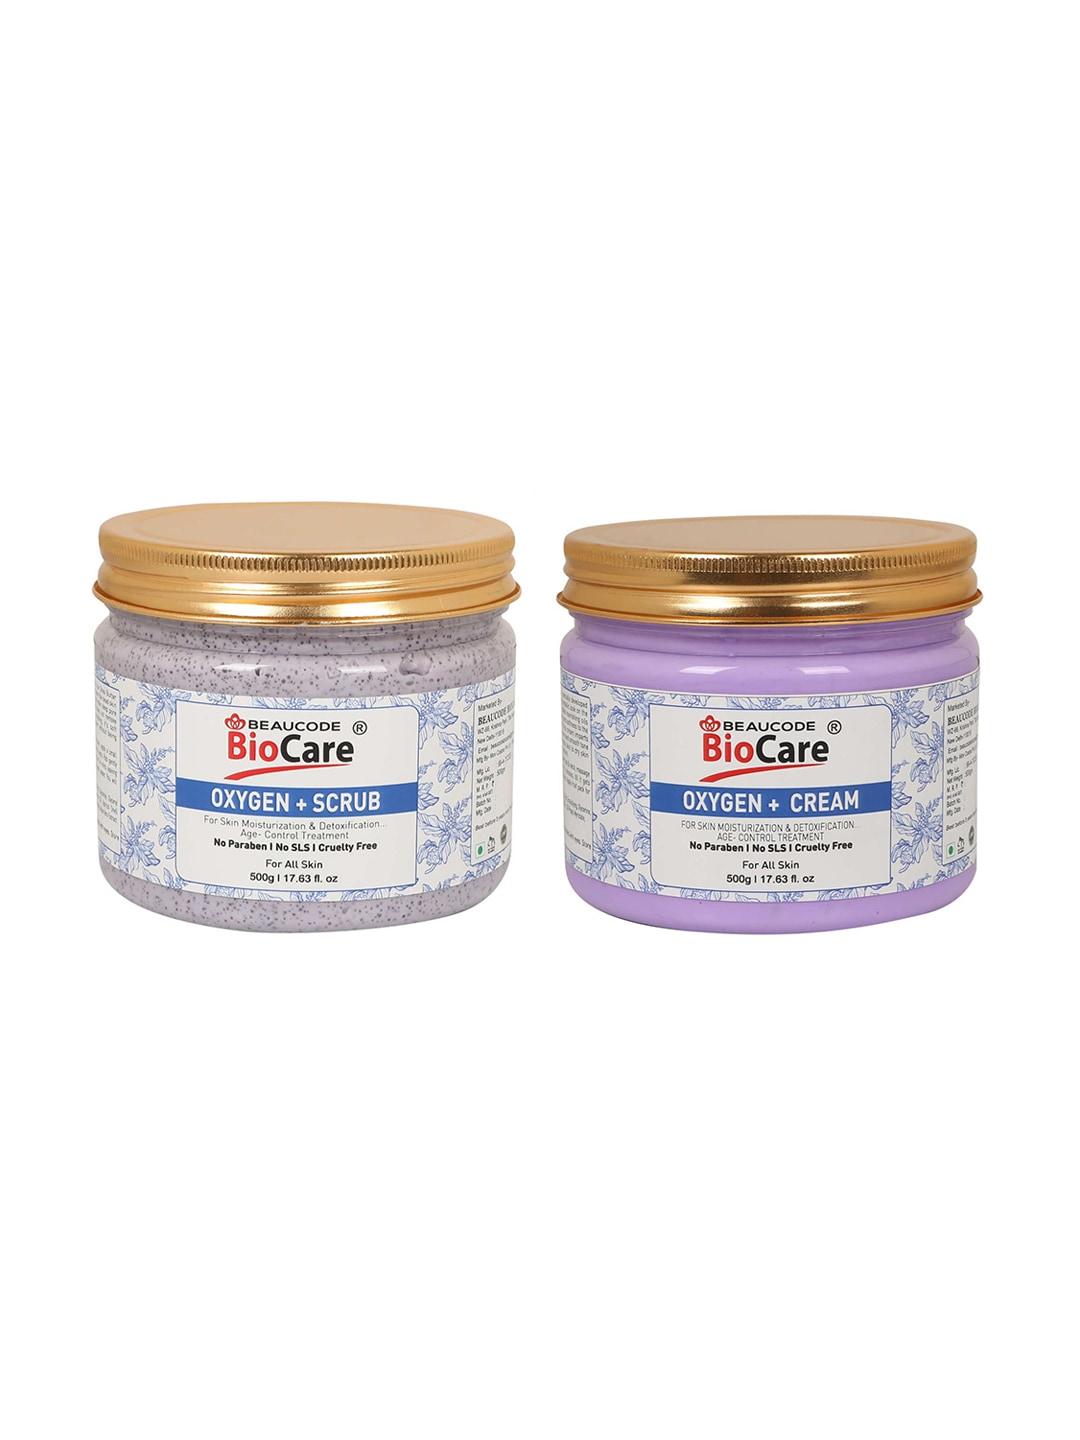 beaucode biocare blue set of oxygen+ scrub & cream - 500 g each